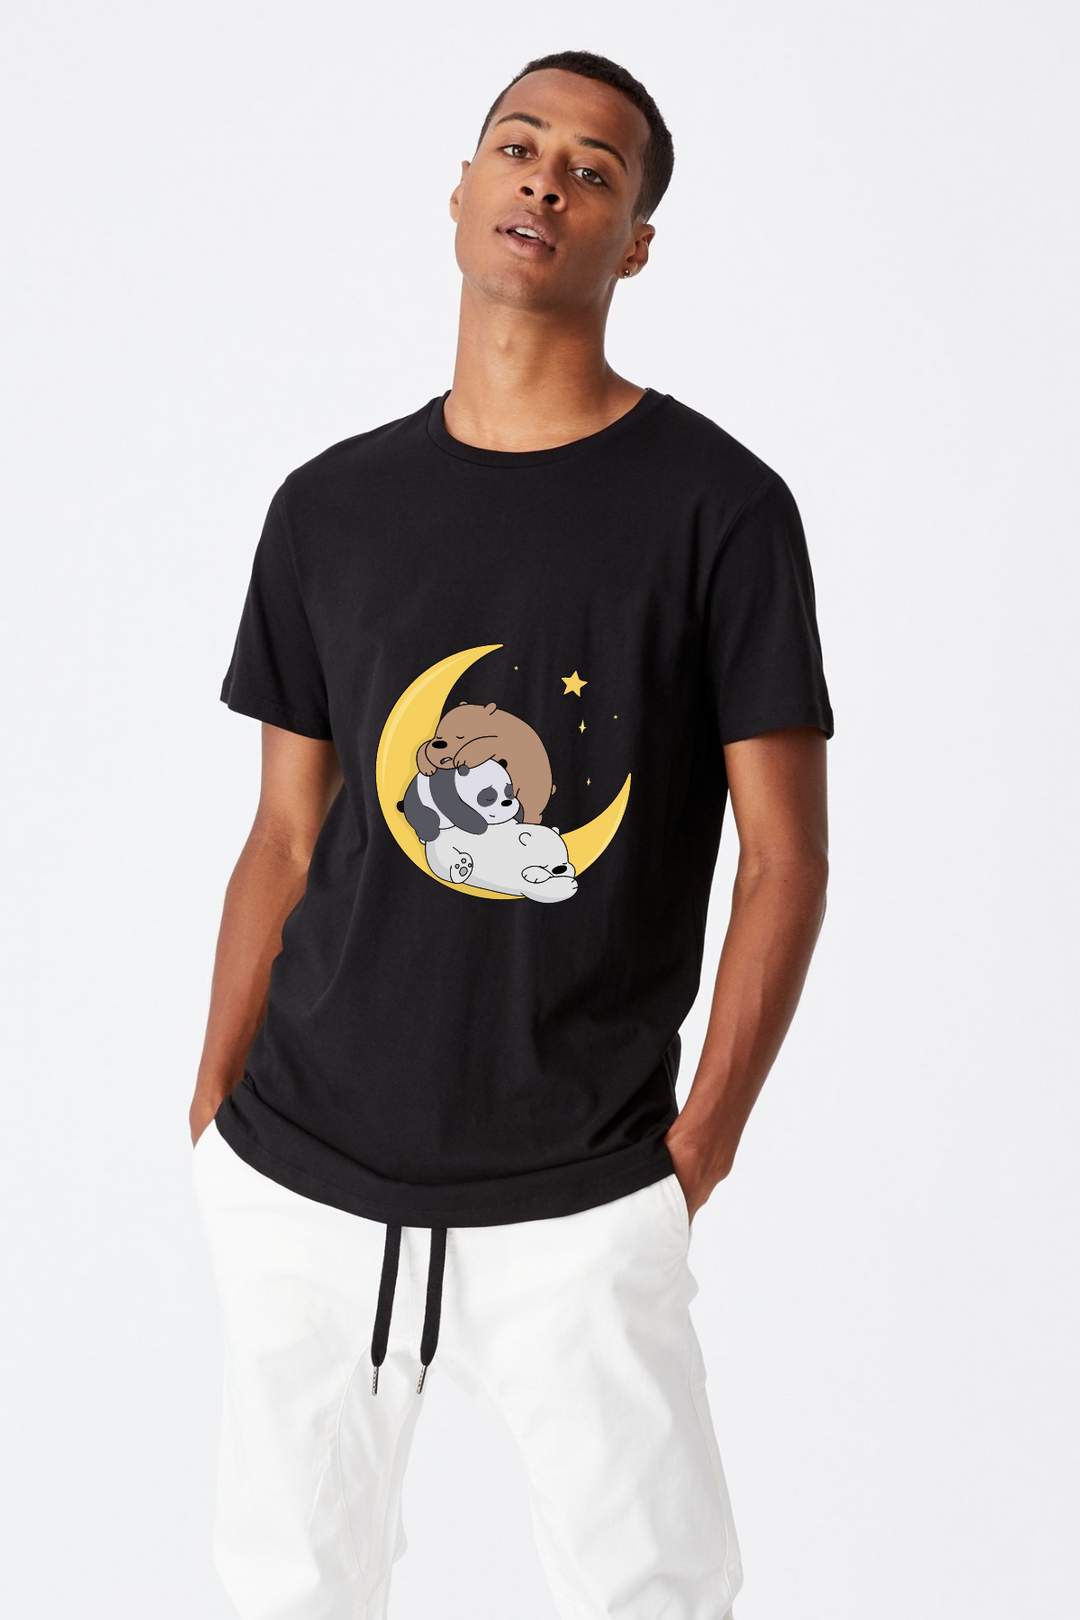 Sleepy Bears On Moon - Printed Half sleeves T- Shirt